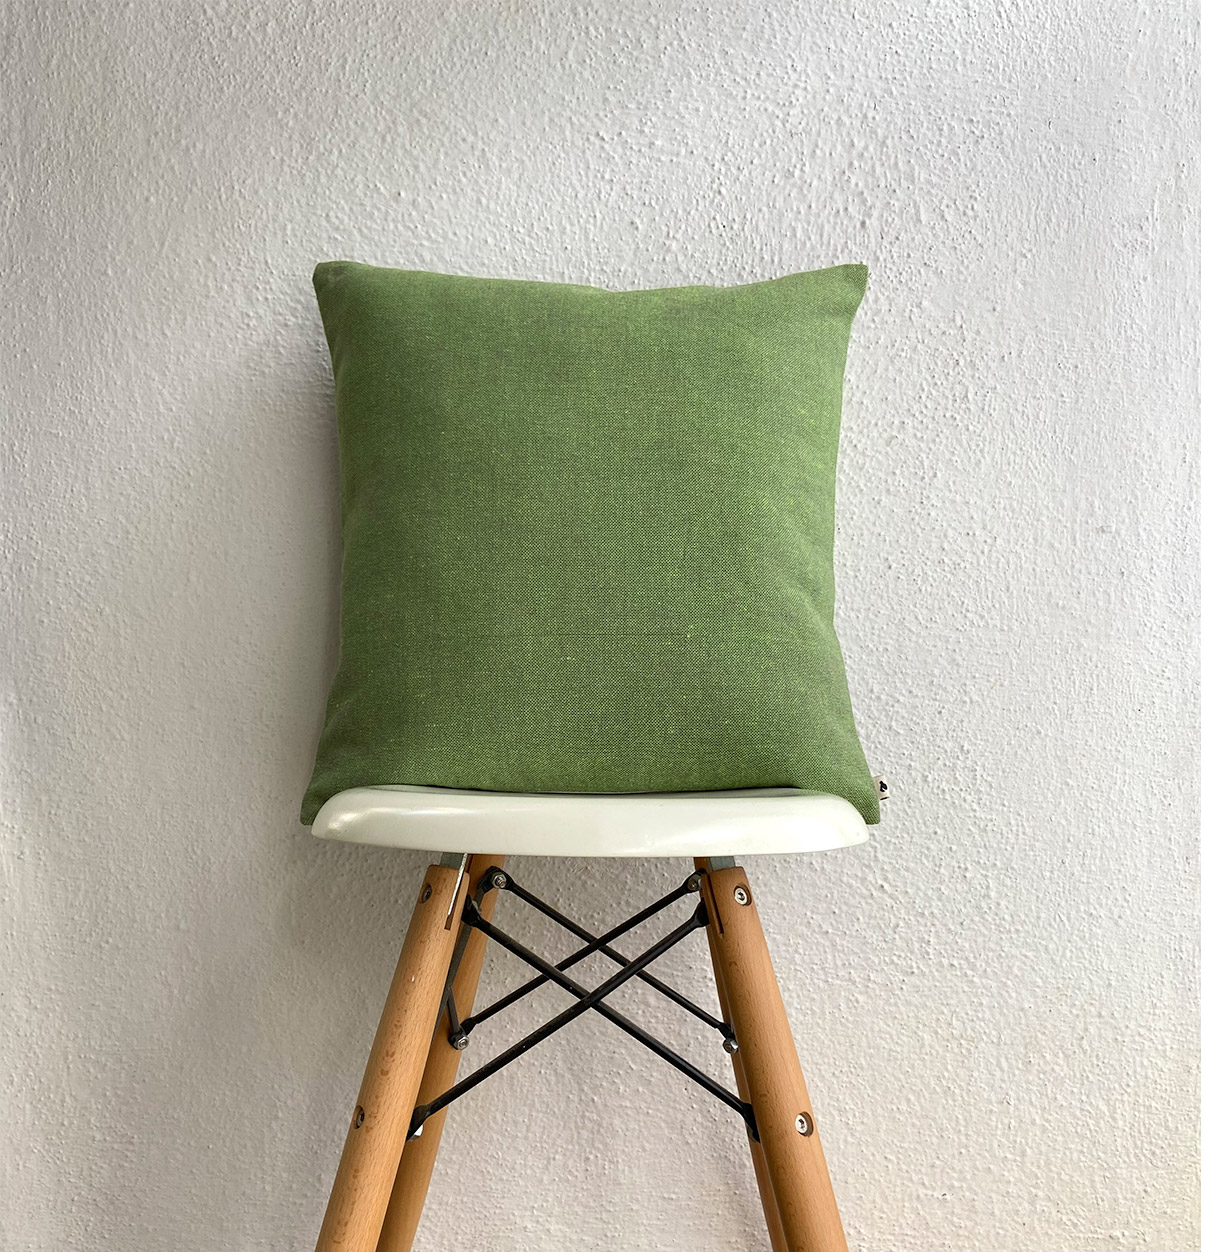 Chambray Cotton Cushion cover Fern Green 16″x16″